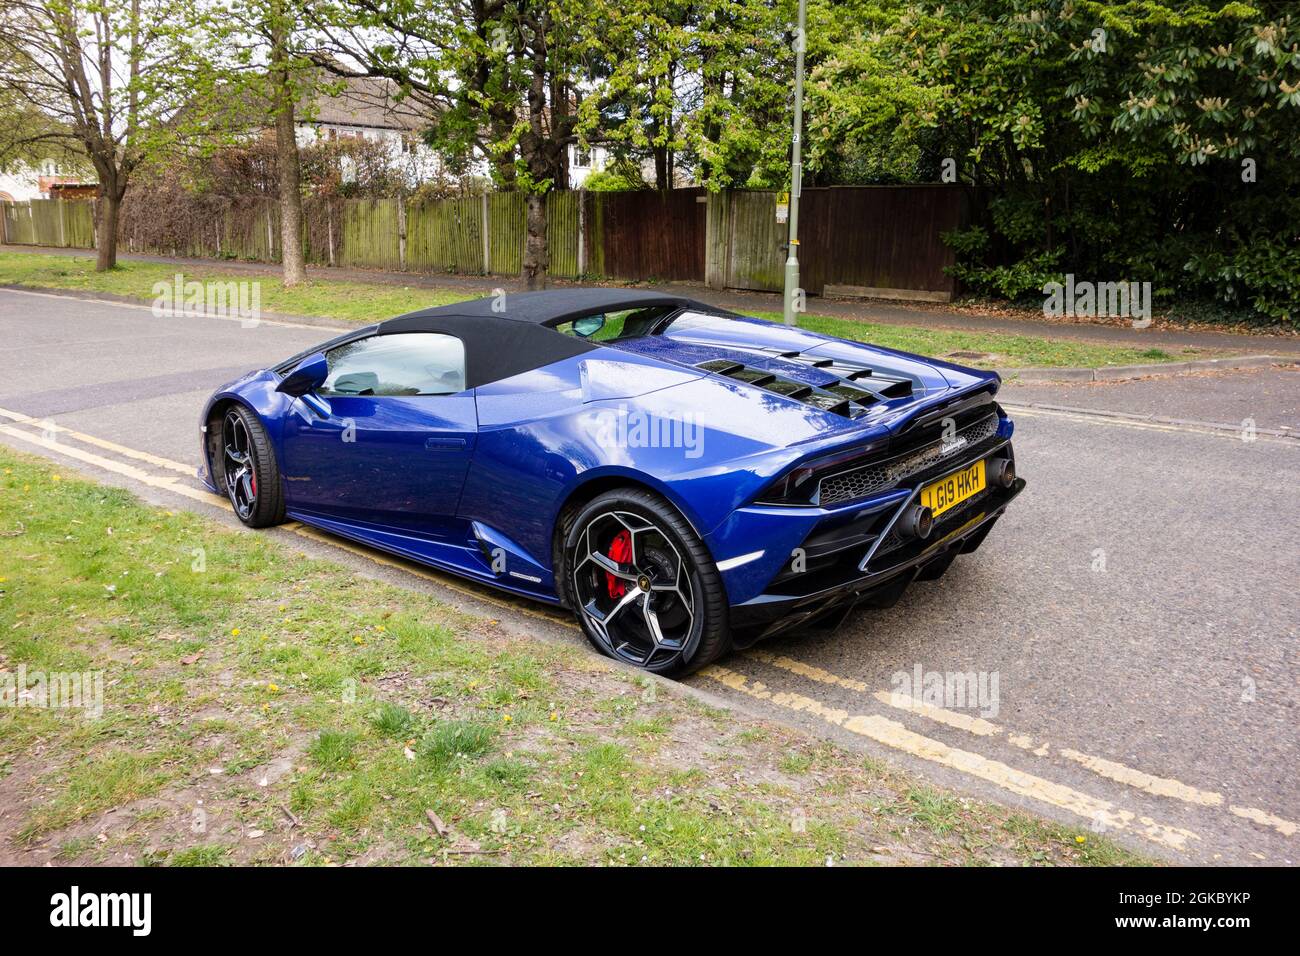 Blue Lamborghini parked on double yellow lines, UK Stock Photo